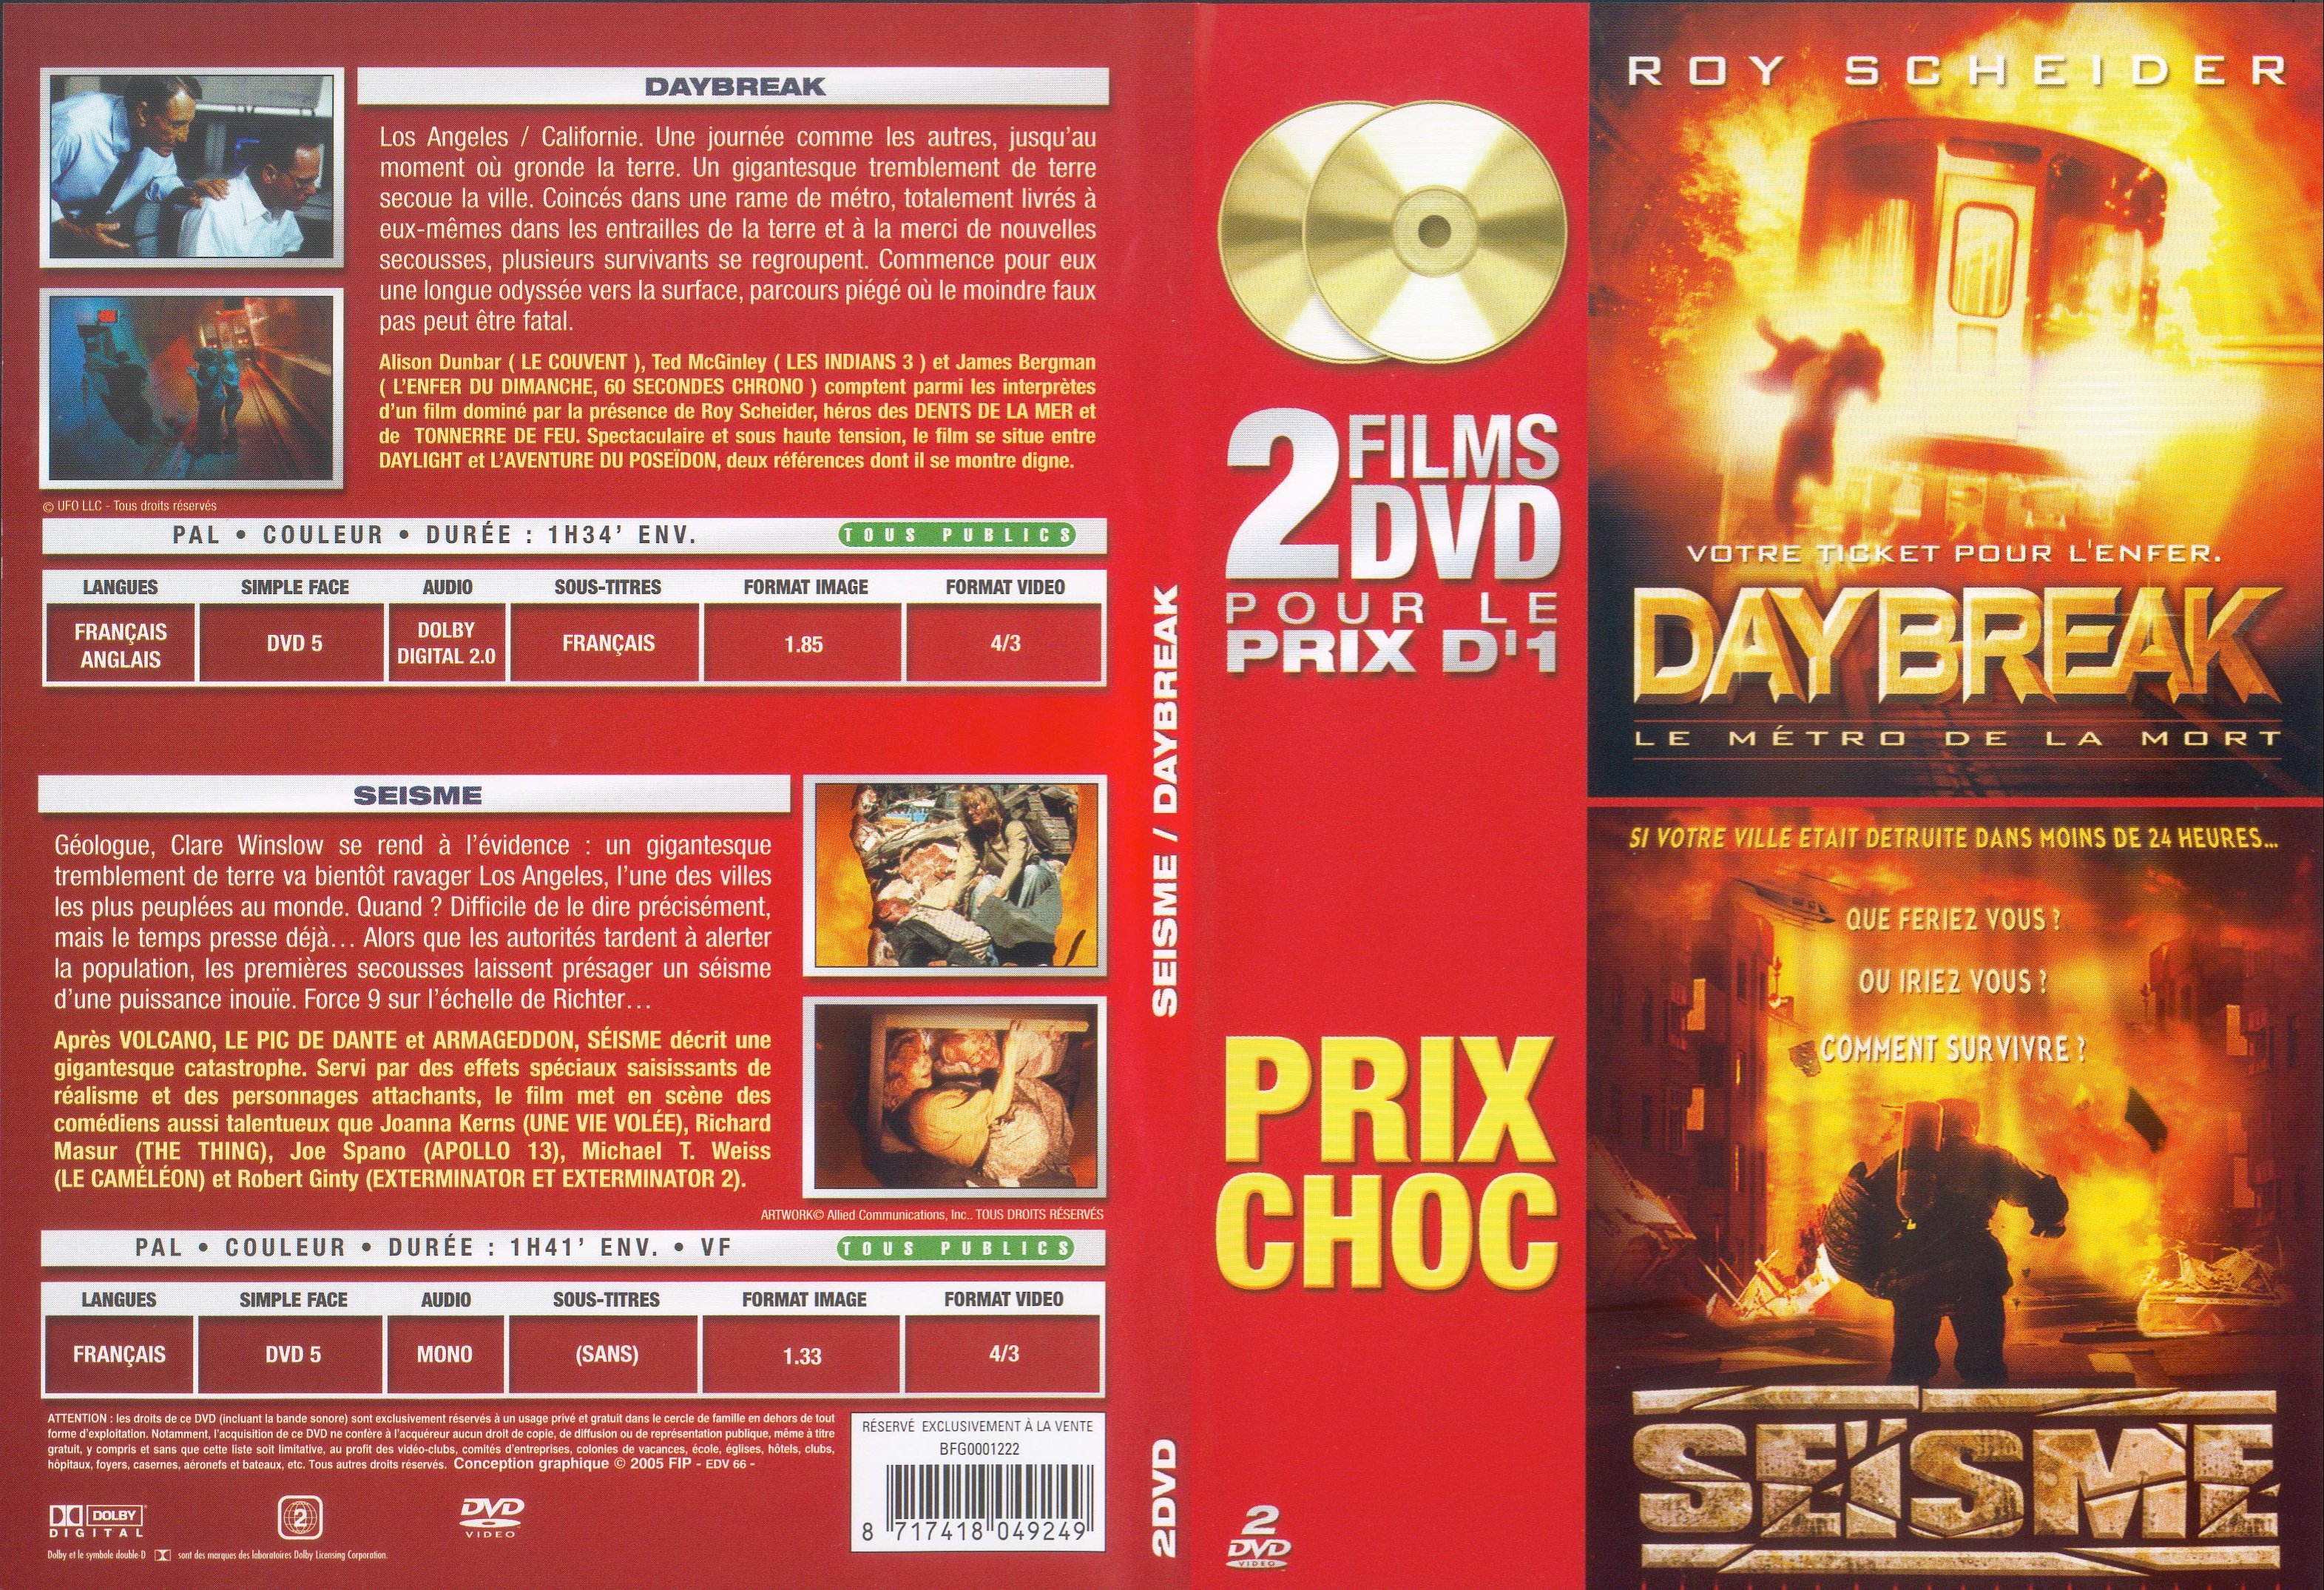 Jaquette DVD Daybreak - Seisme